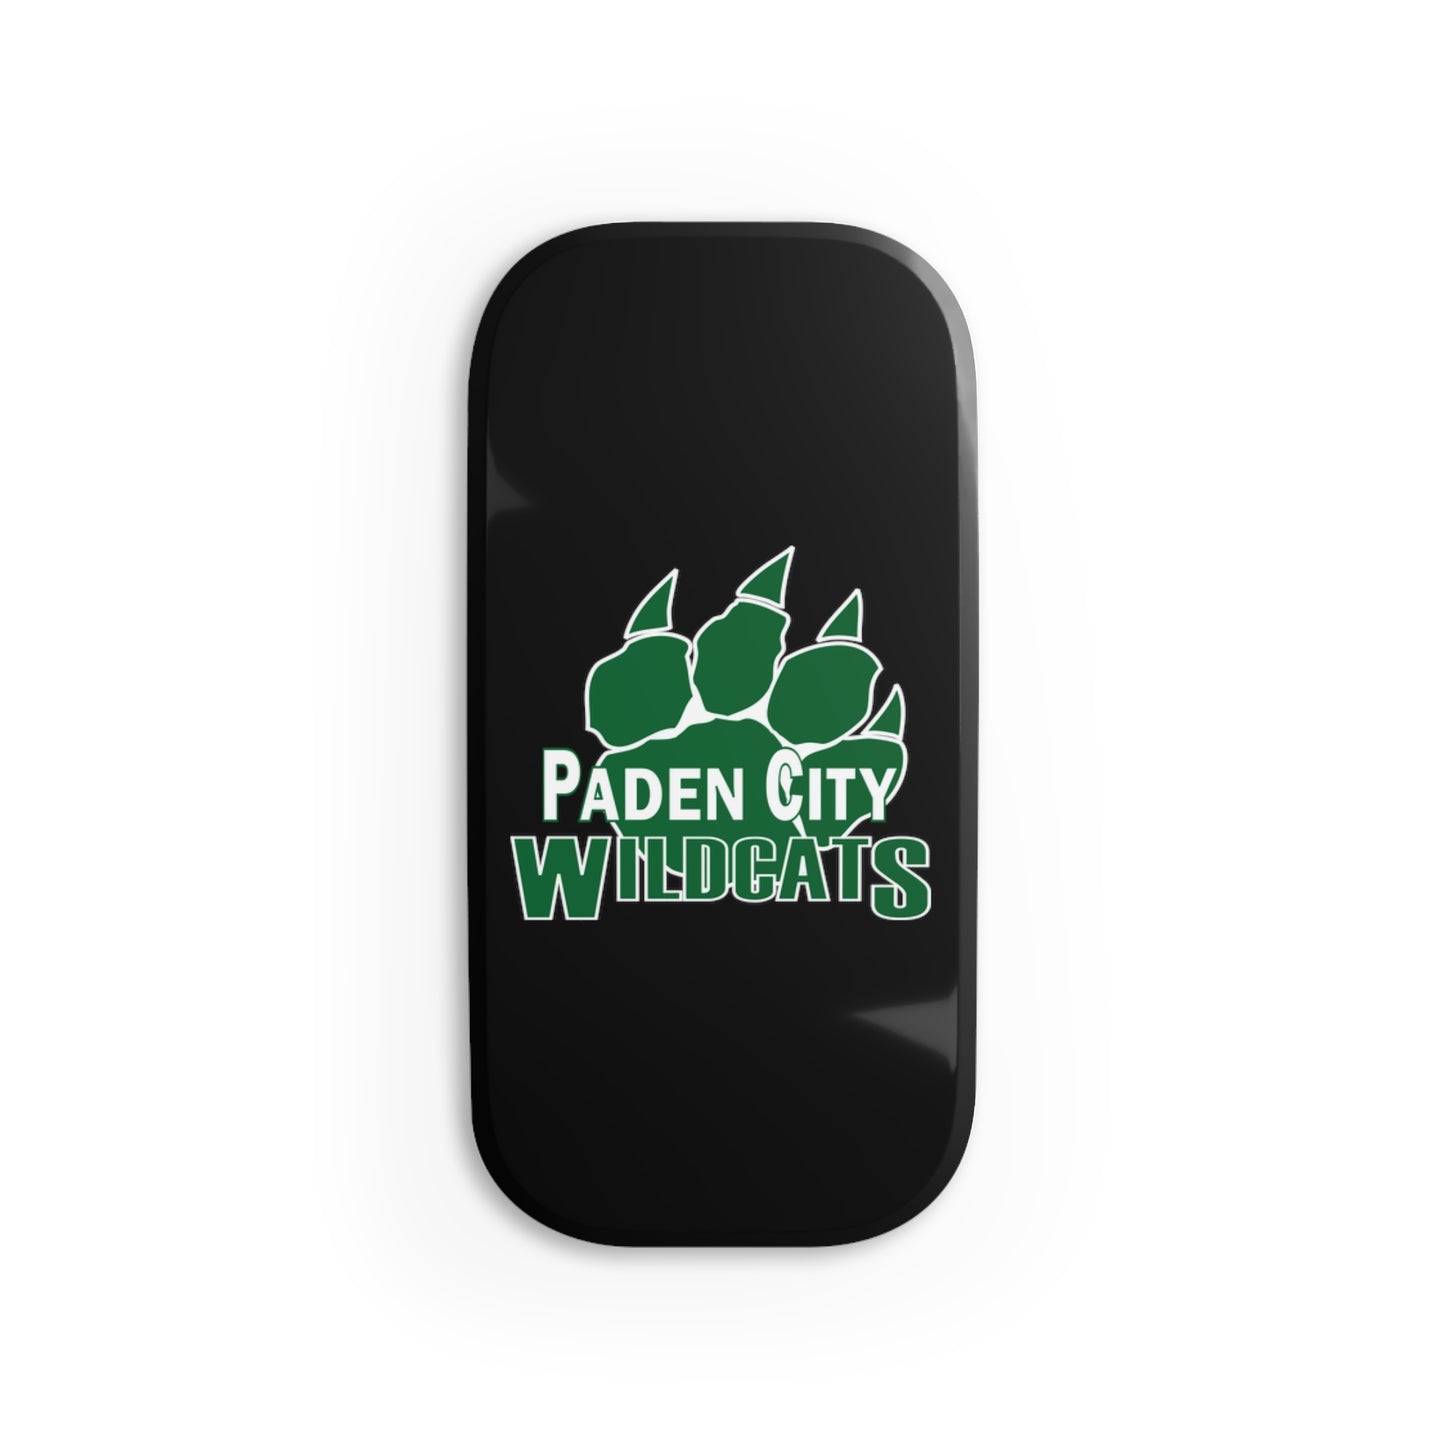 Phone Click-On Grip - Paden City